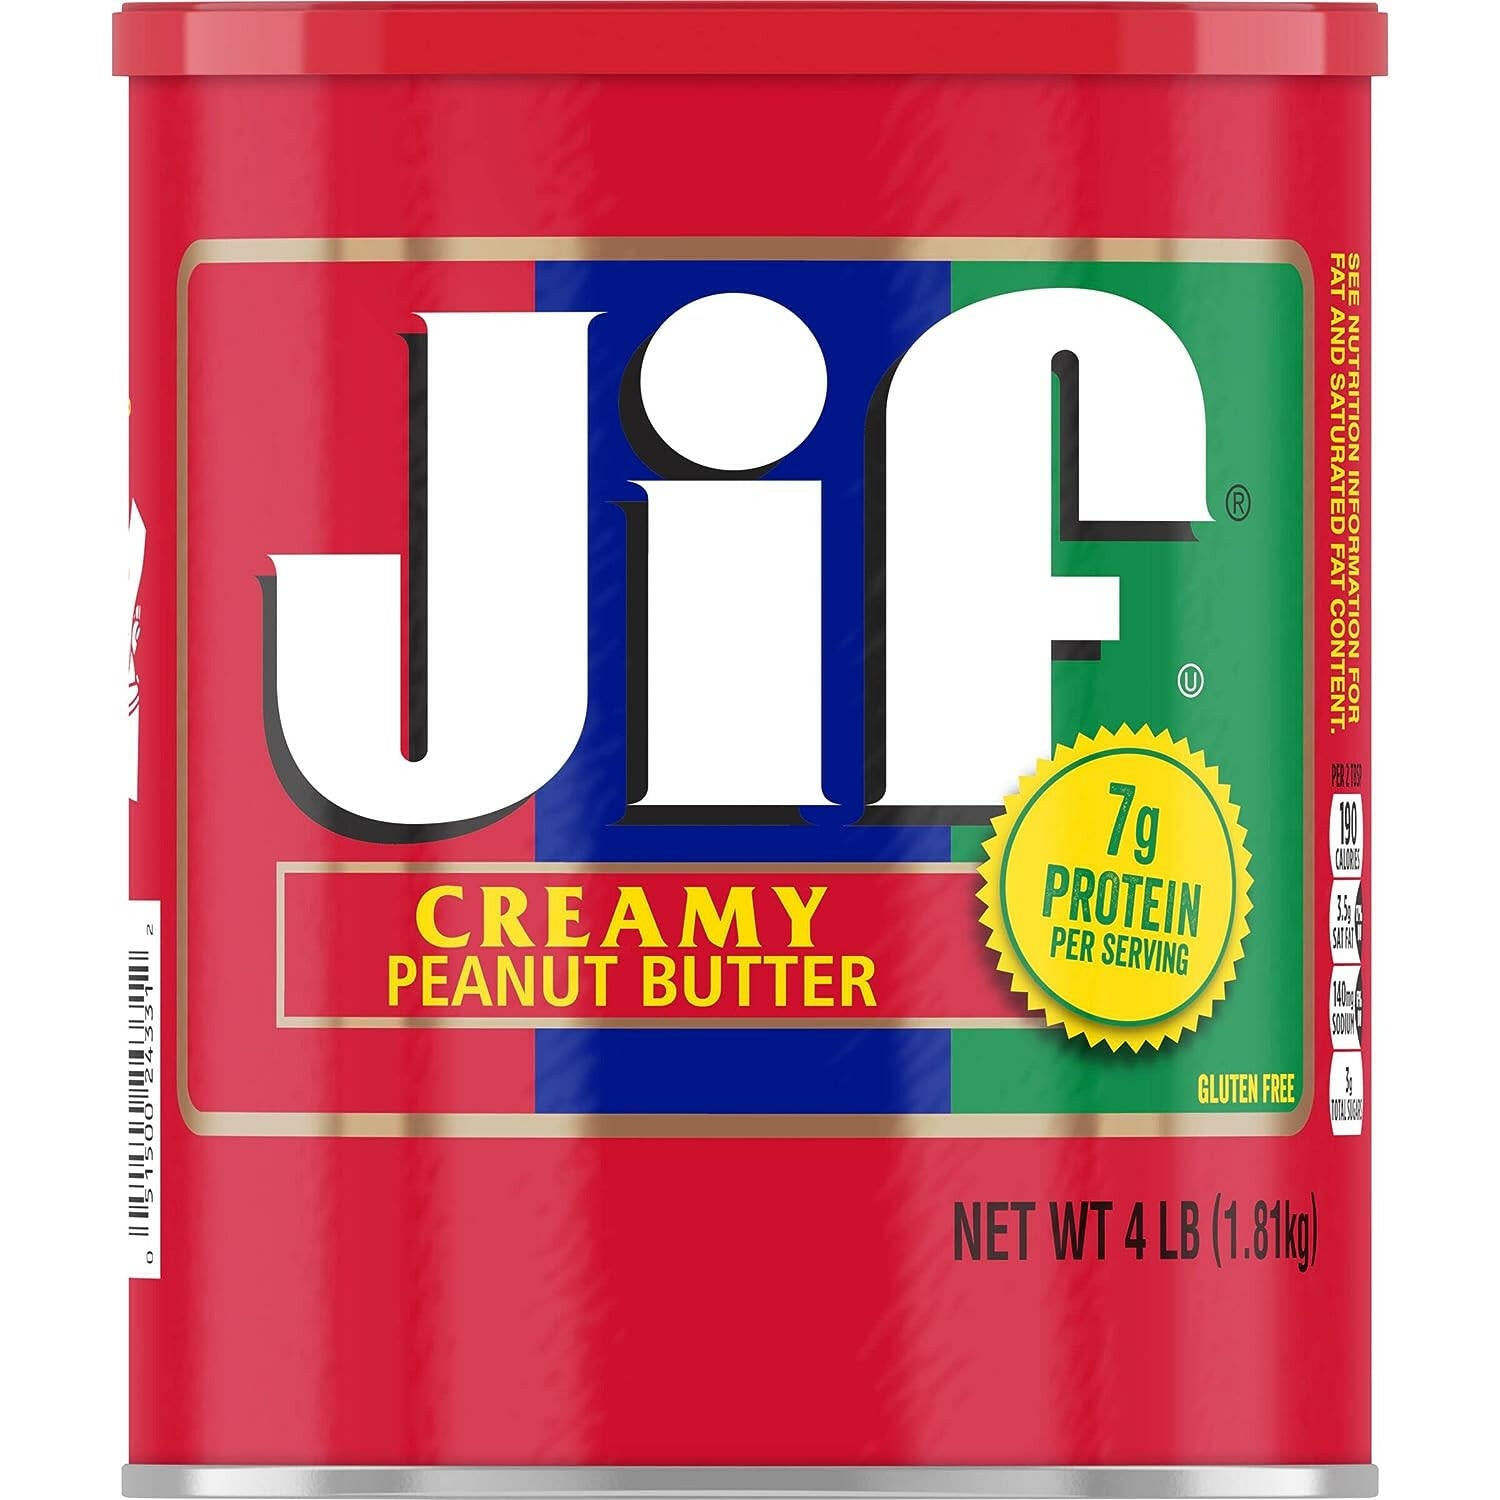 Jif Creamy peanut butter, 60 oz